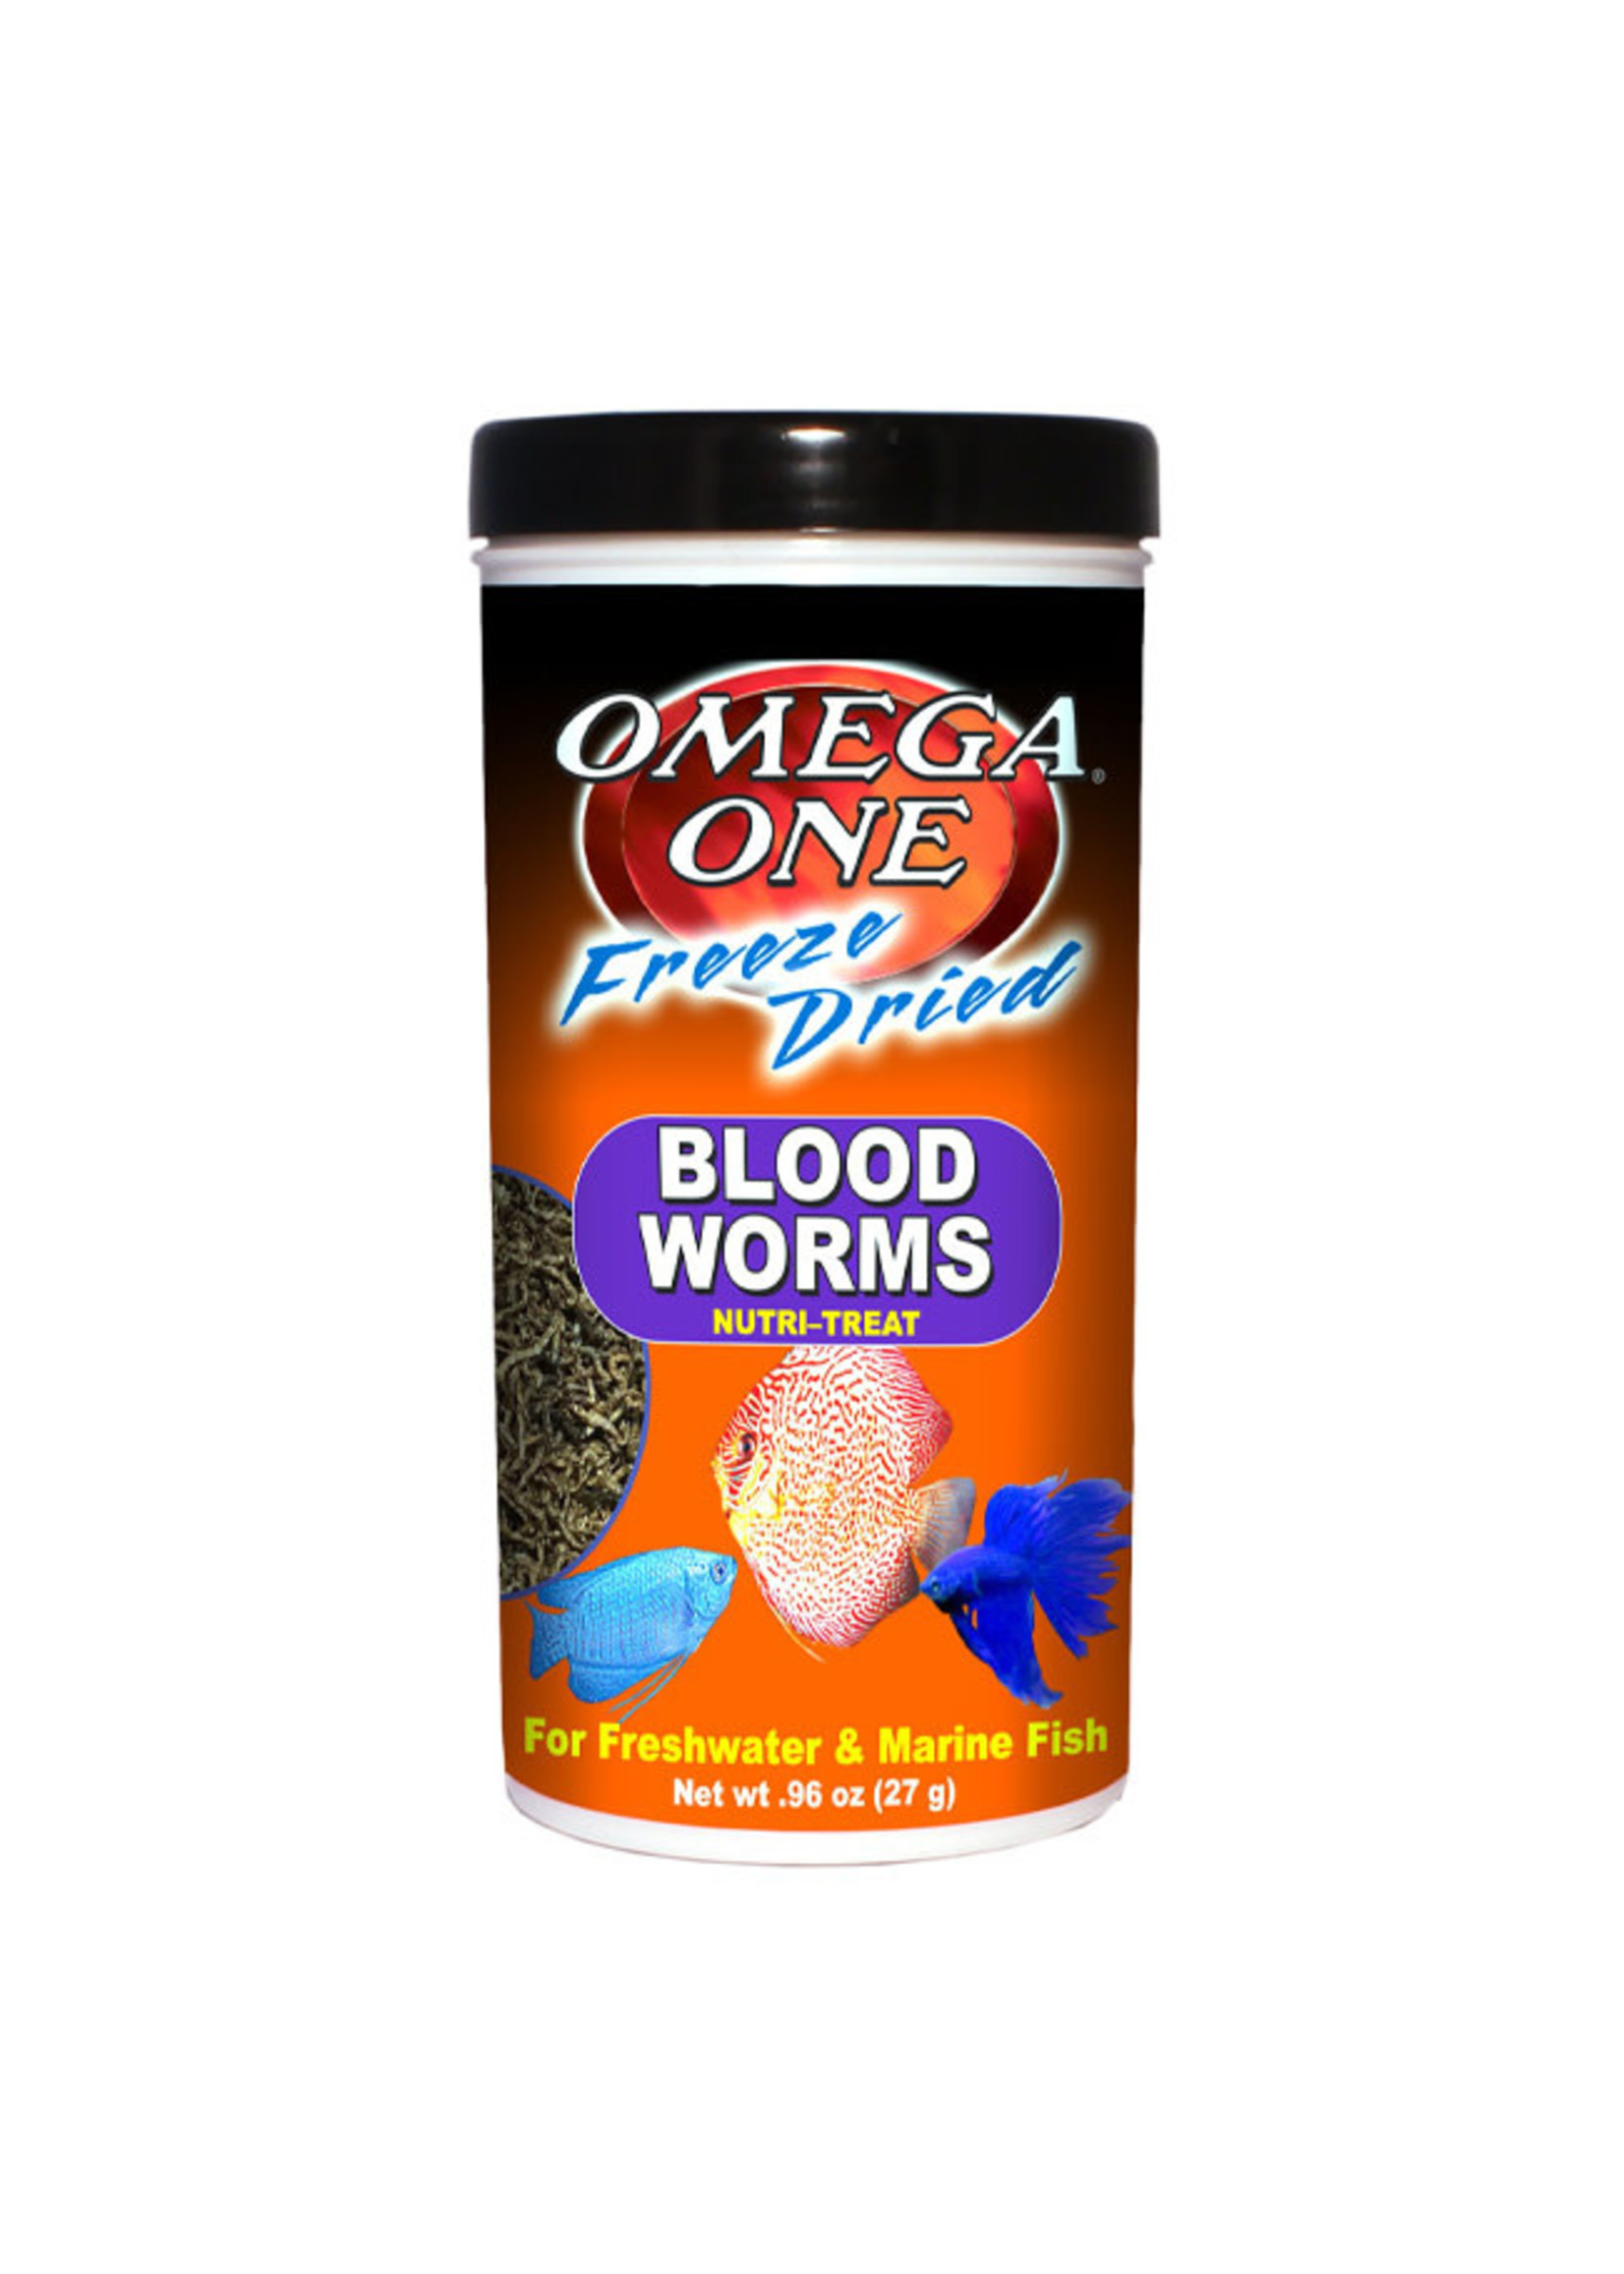 Omega One Omega One Freeze Dried Blood Worms Nutri-Treat